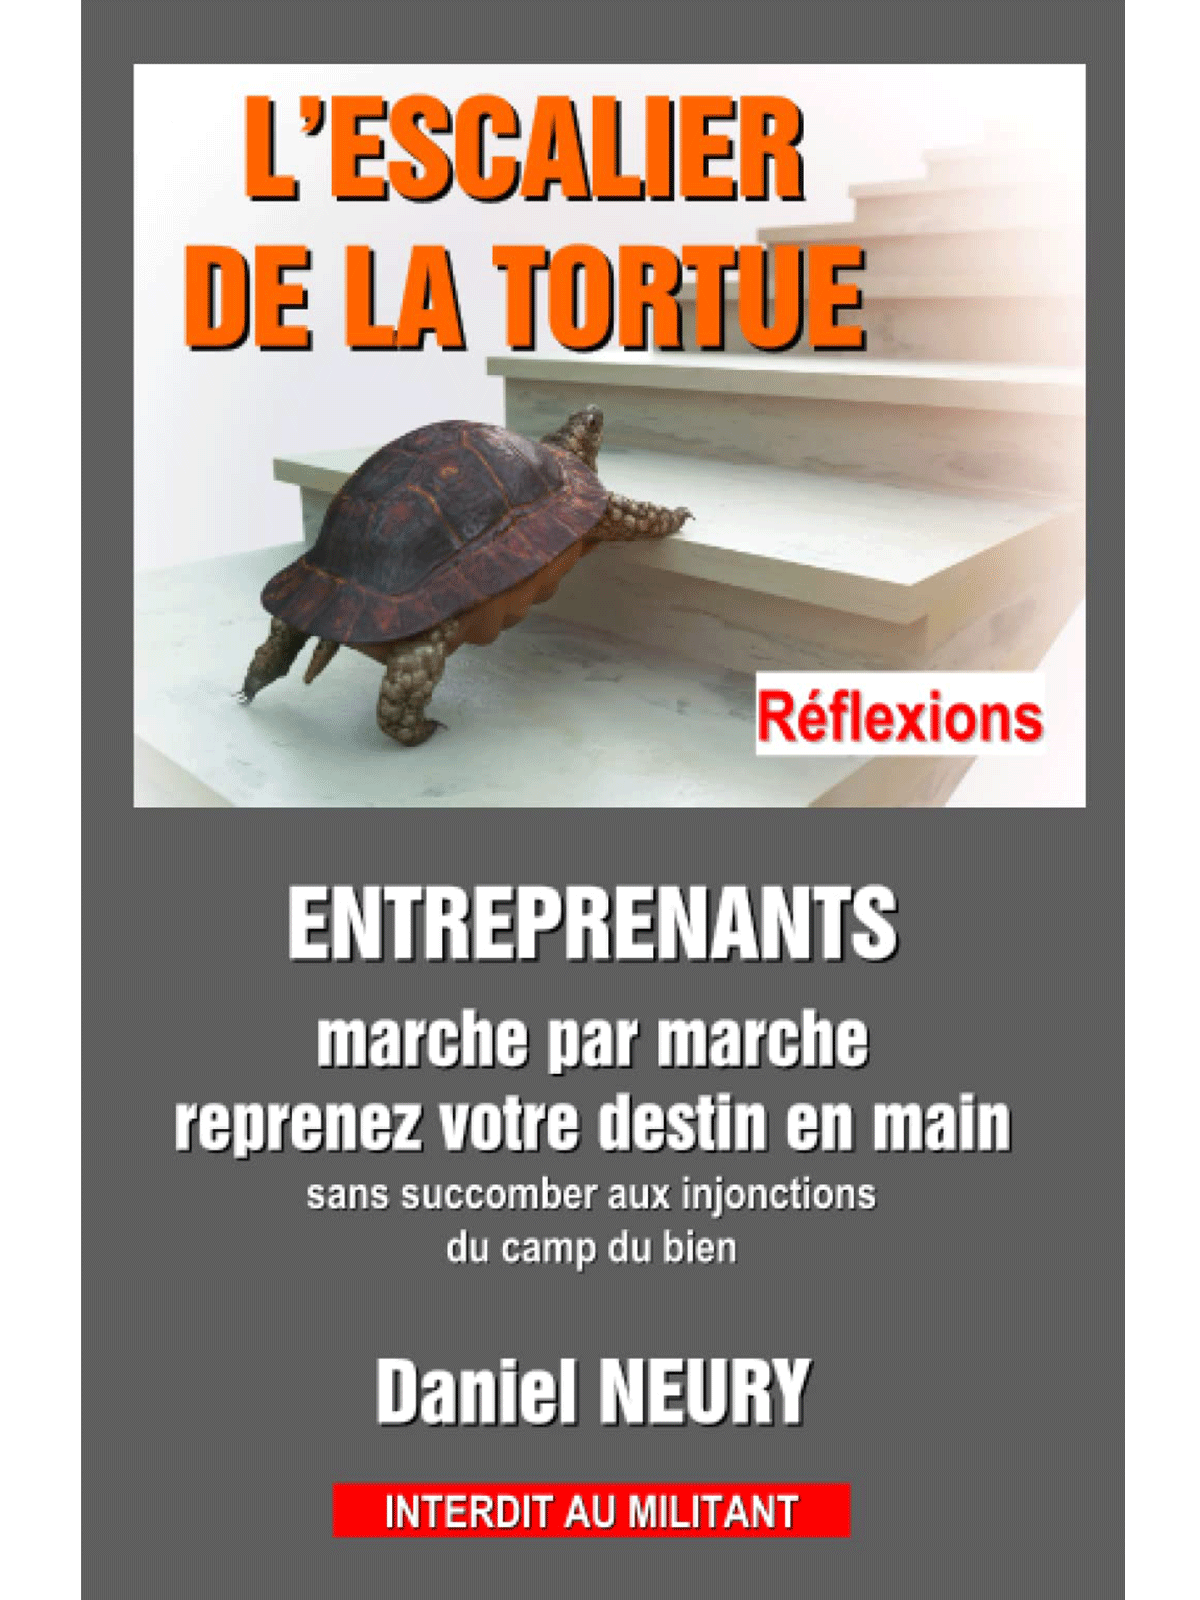 Daniel NEURY : L’ESCALIER DE LA TORTUE